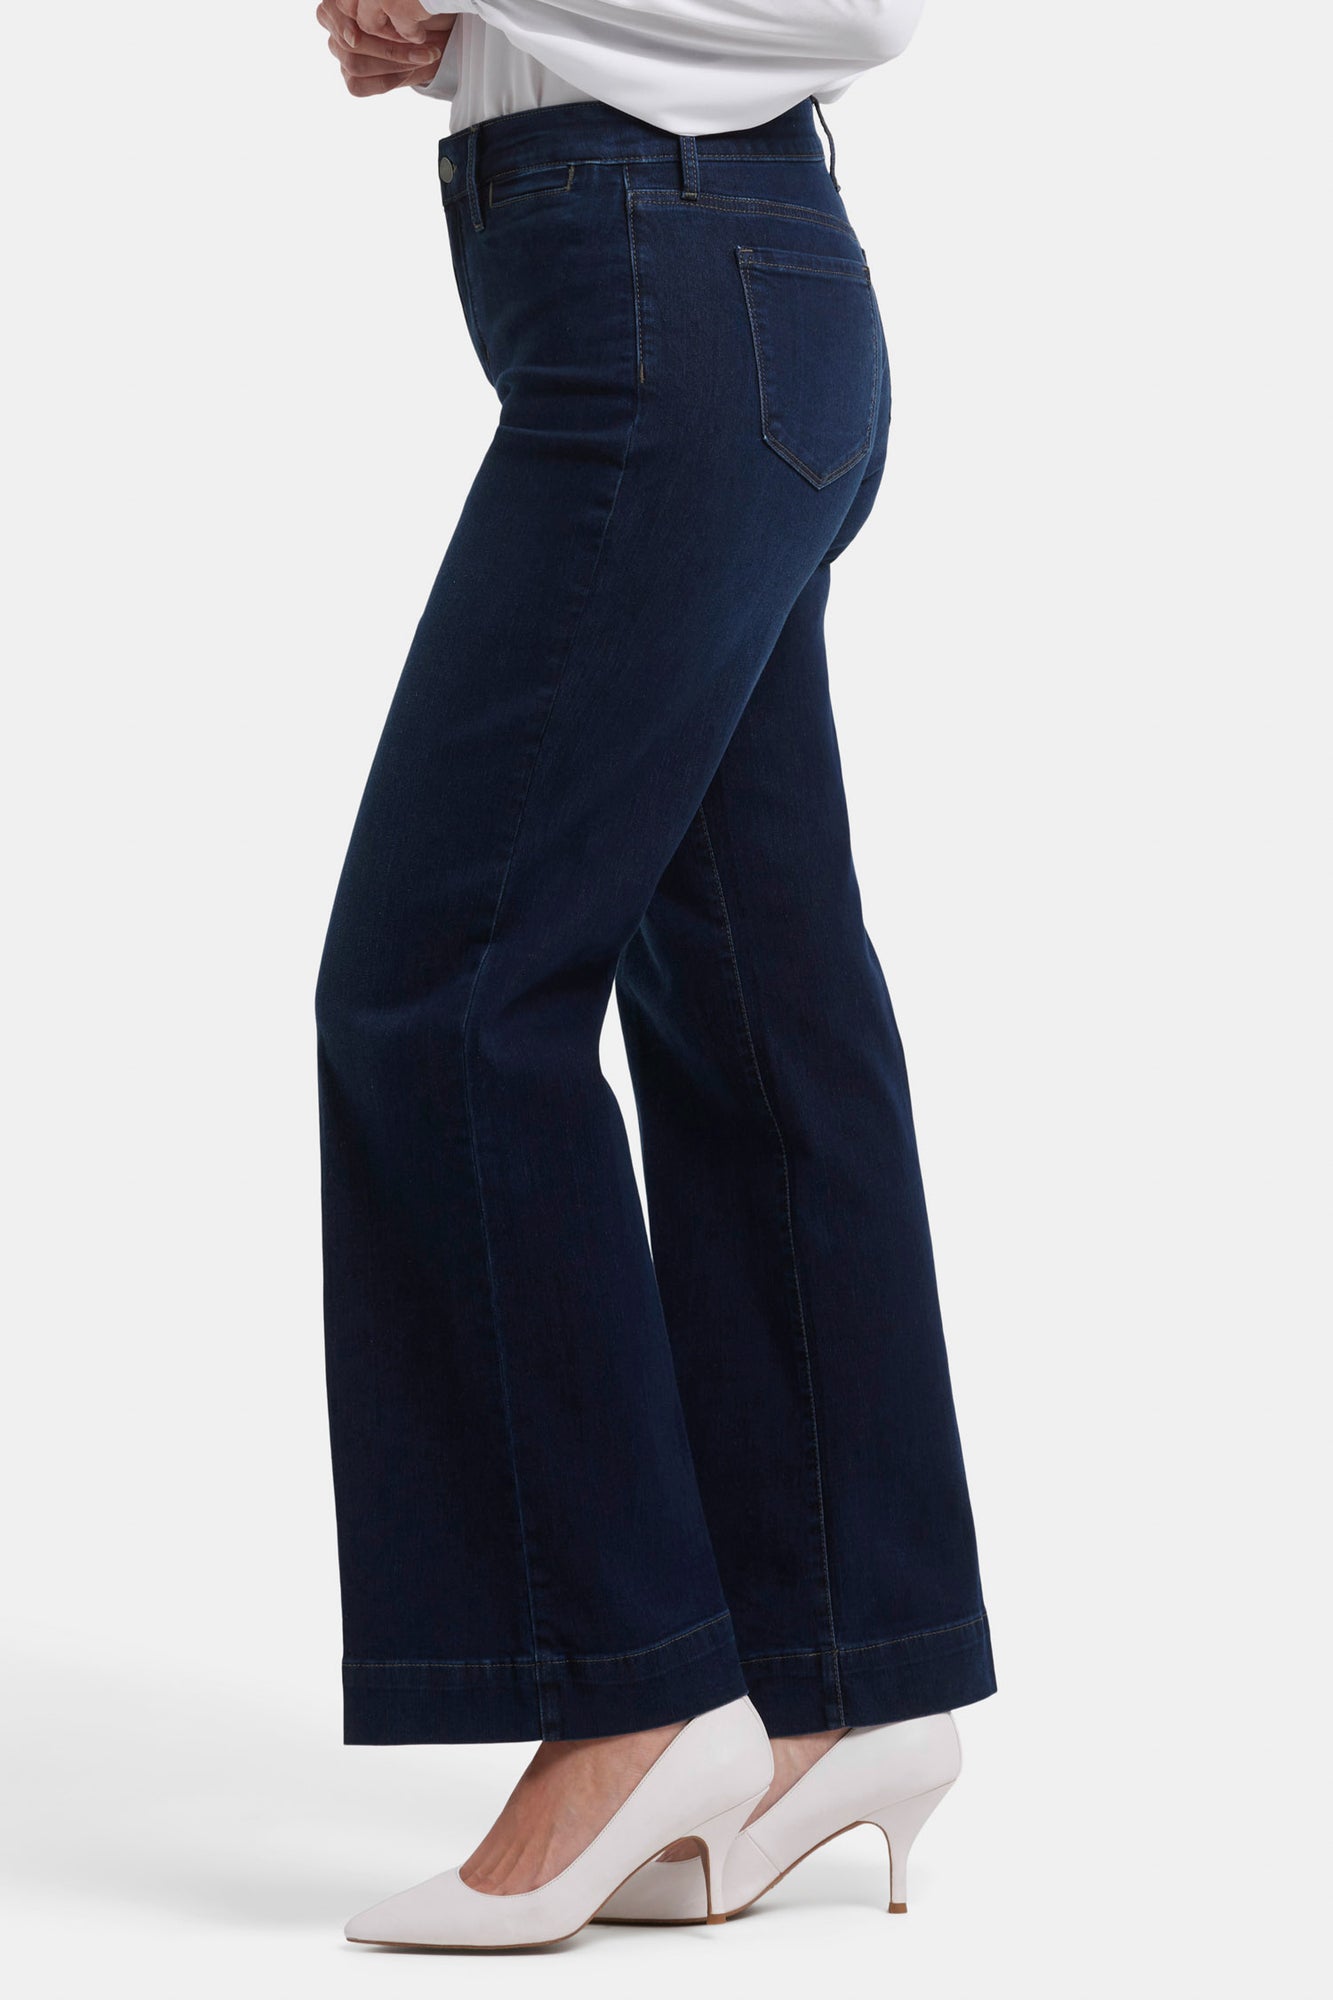 NYDJ Teresa Trouser Jeans  - Burbank Wash